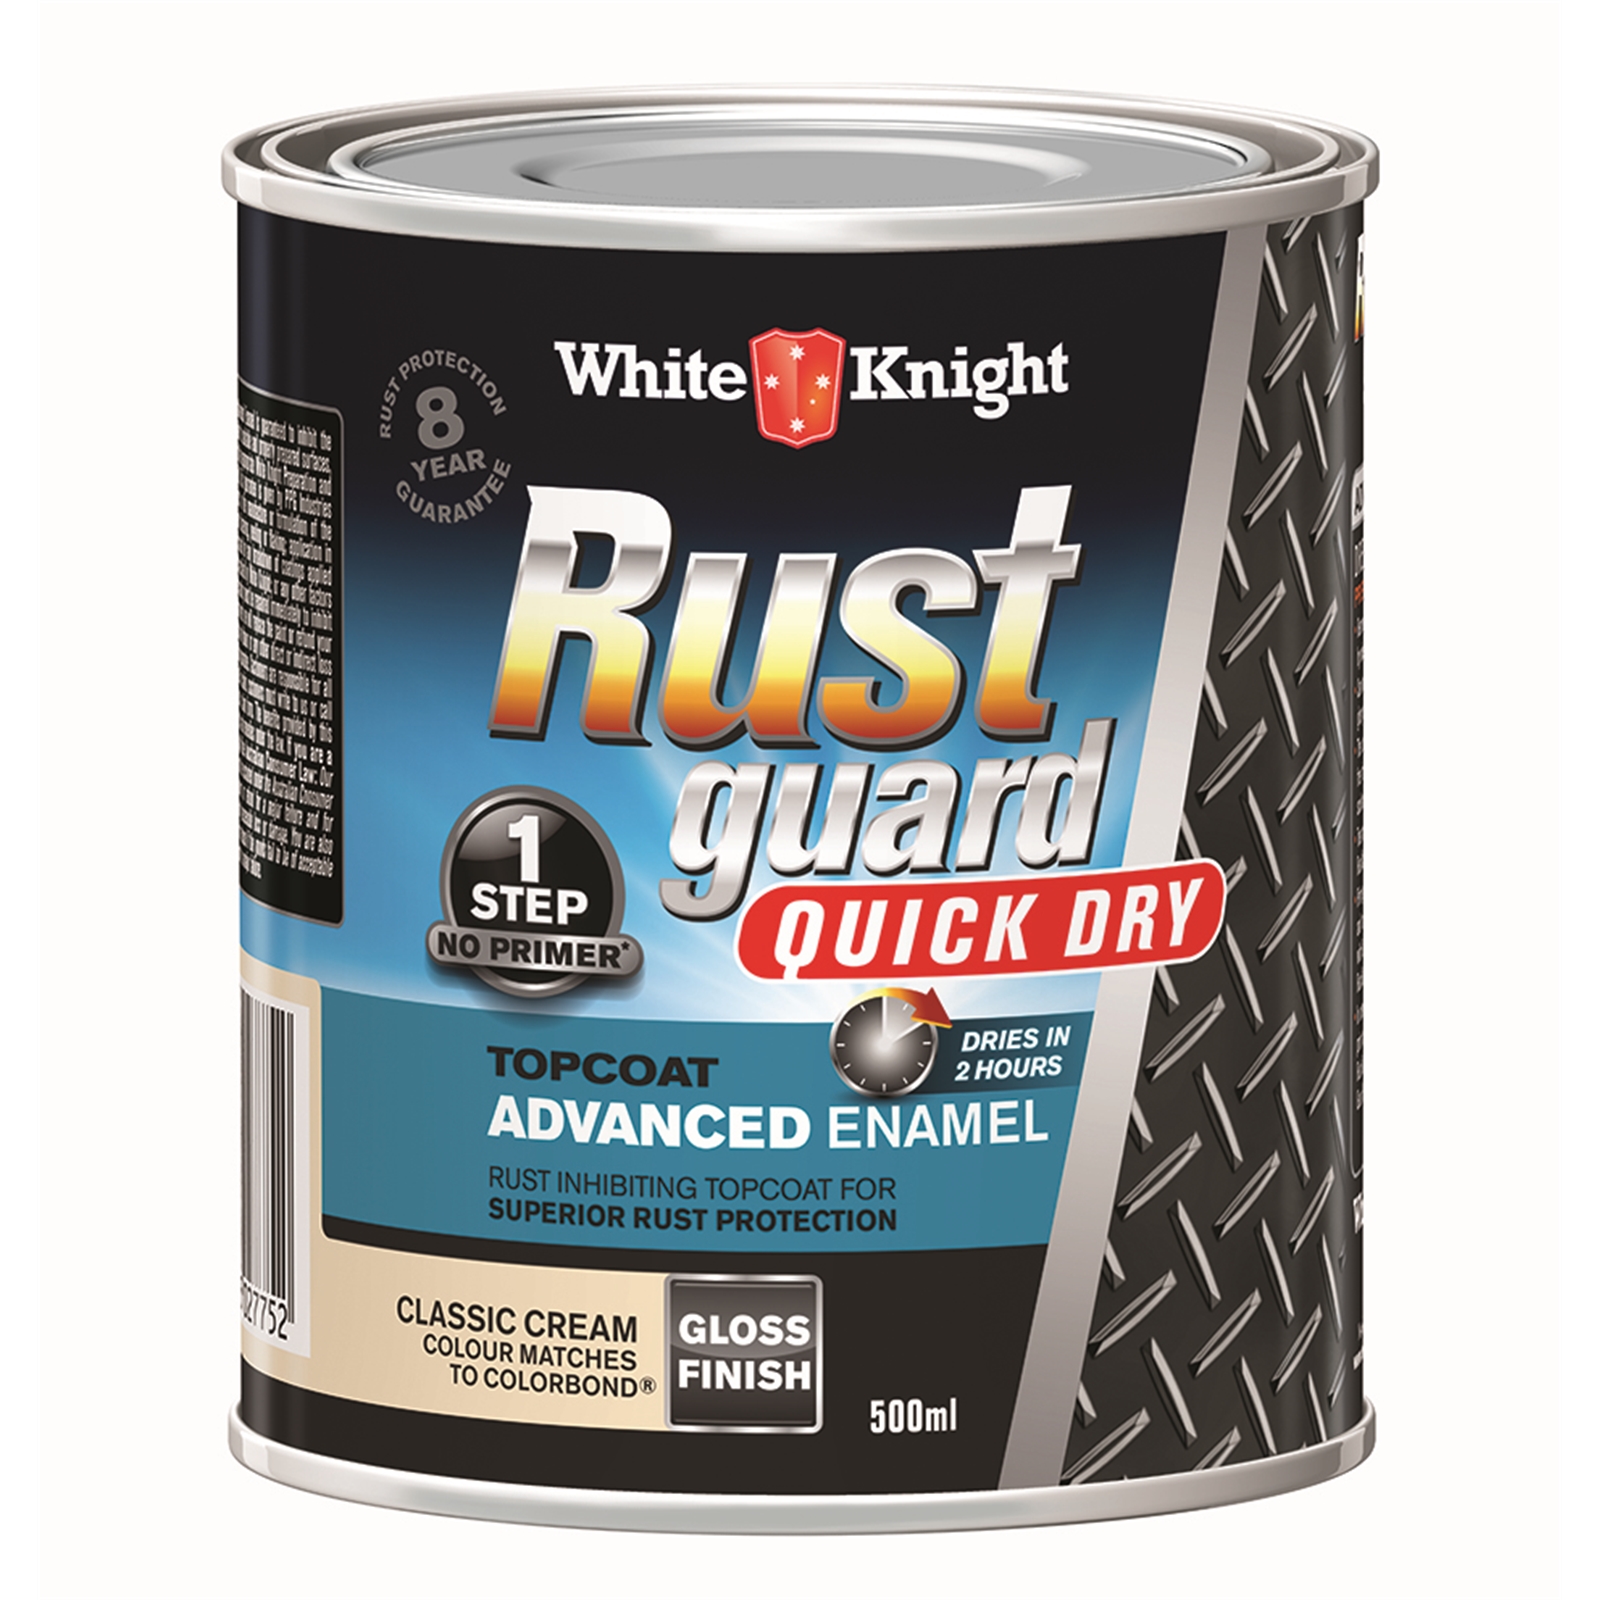 White Knight 500ml Rust Guard Quick Dry Advanced Enamel Gloss Classic Cream